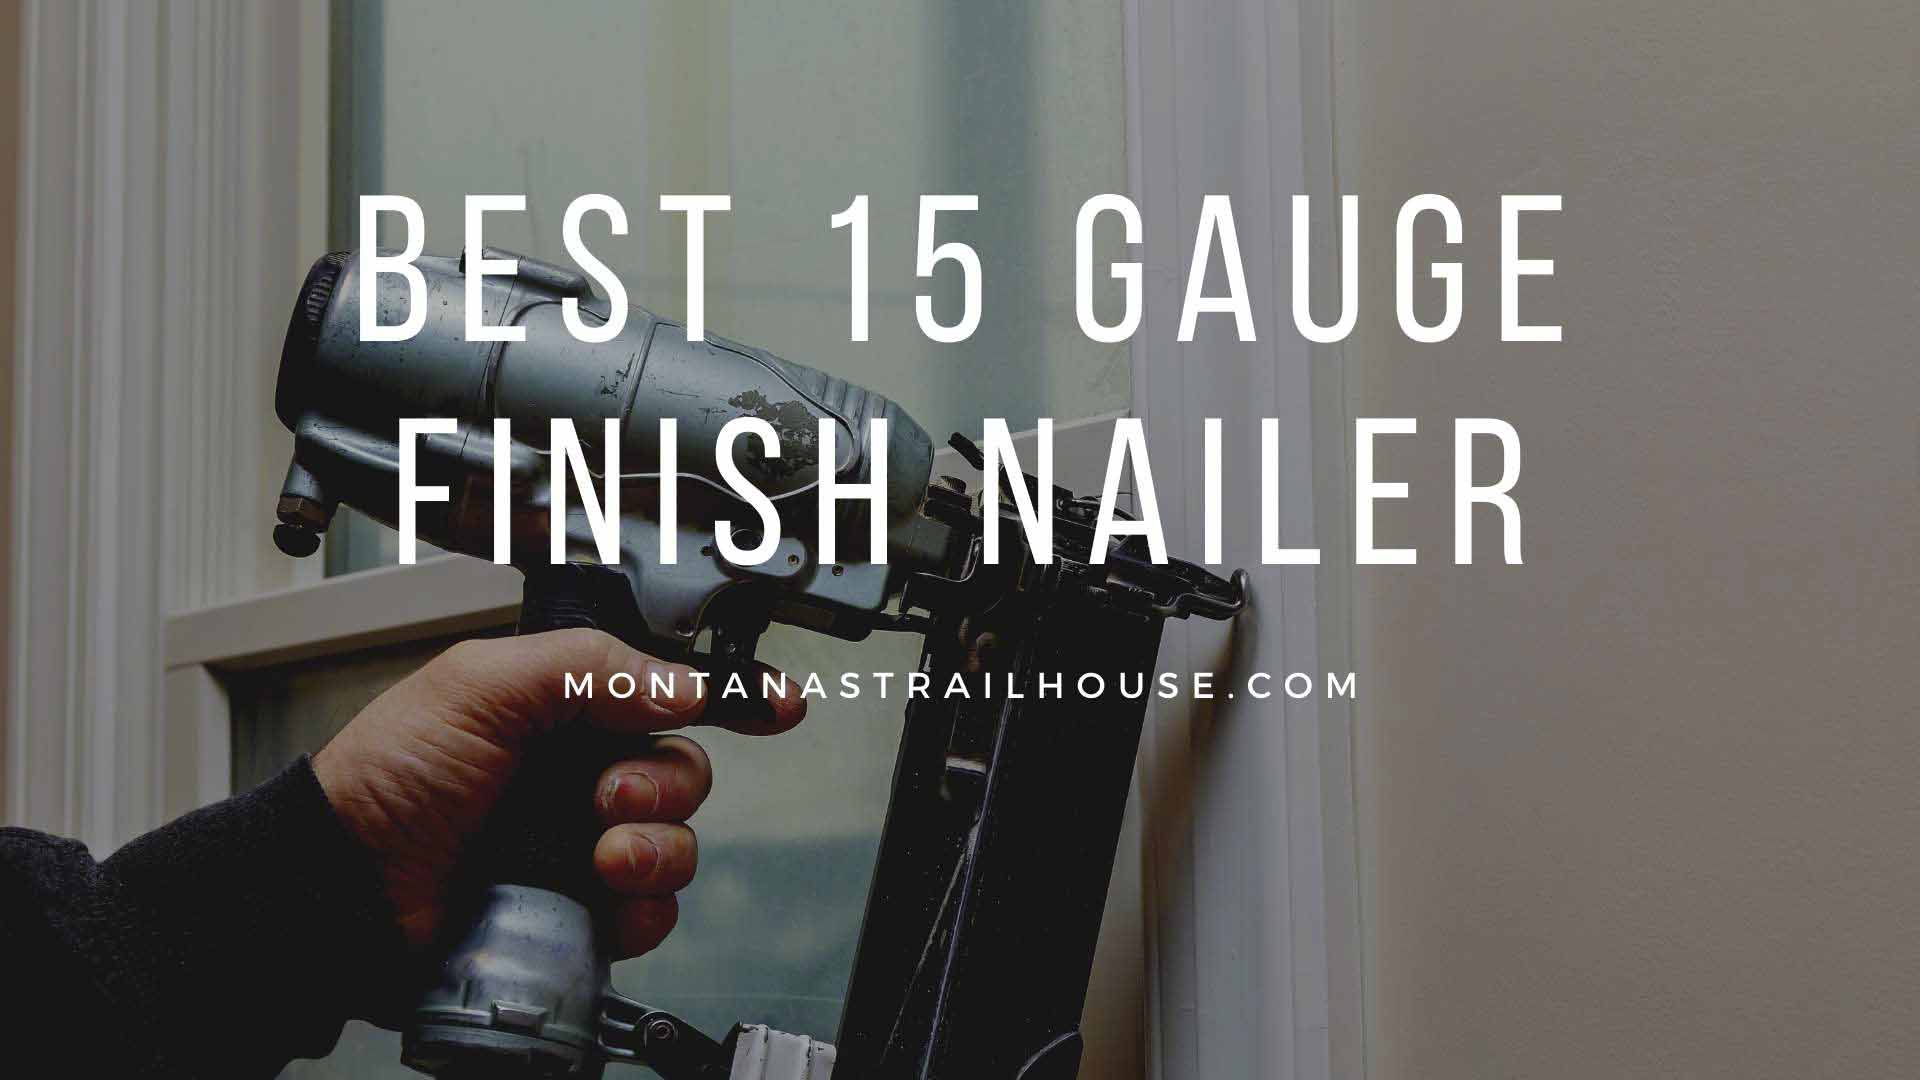 12 Best 15 Gauge Finish Nailer Reviews of 2021